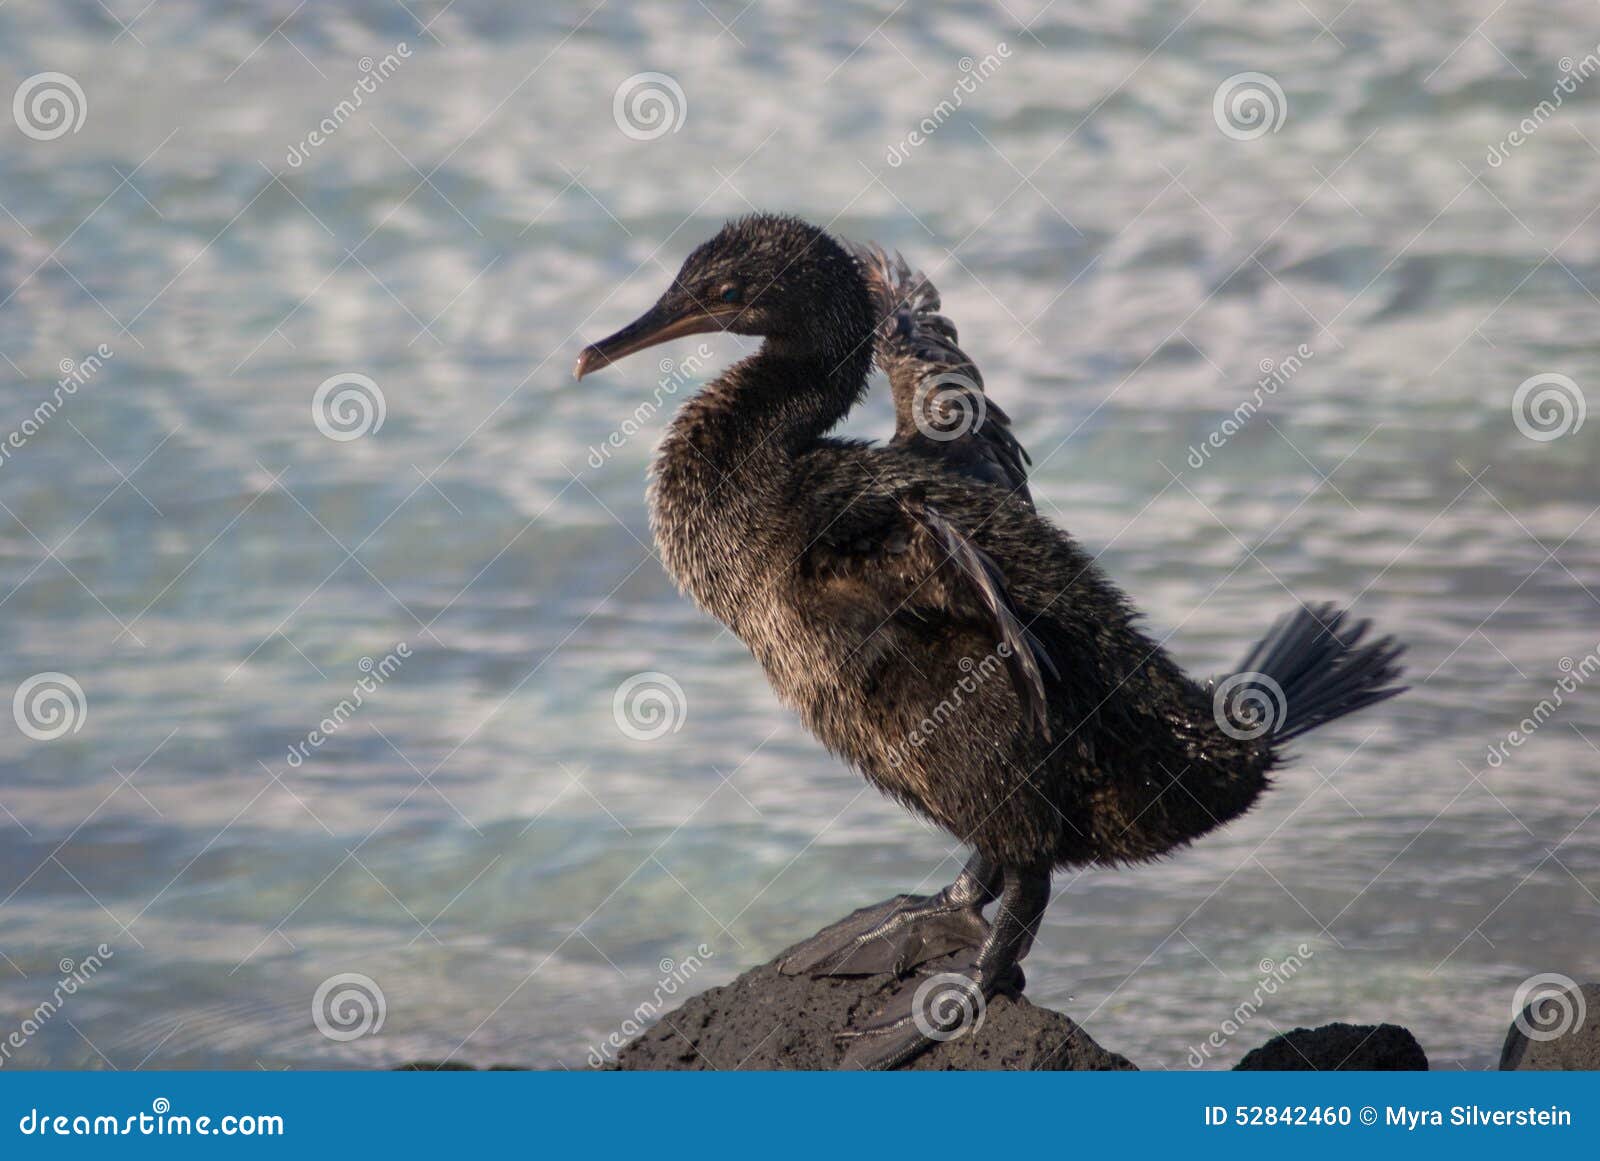 flightless cormorant on galapagos islands